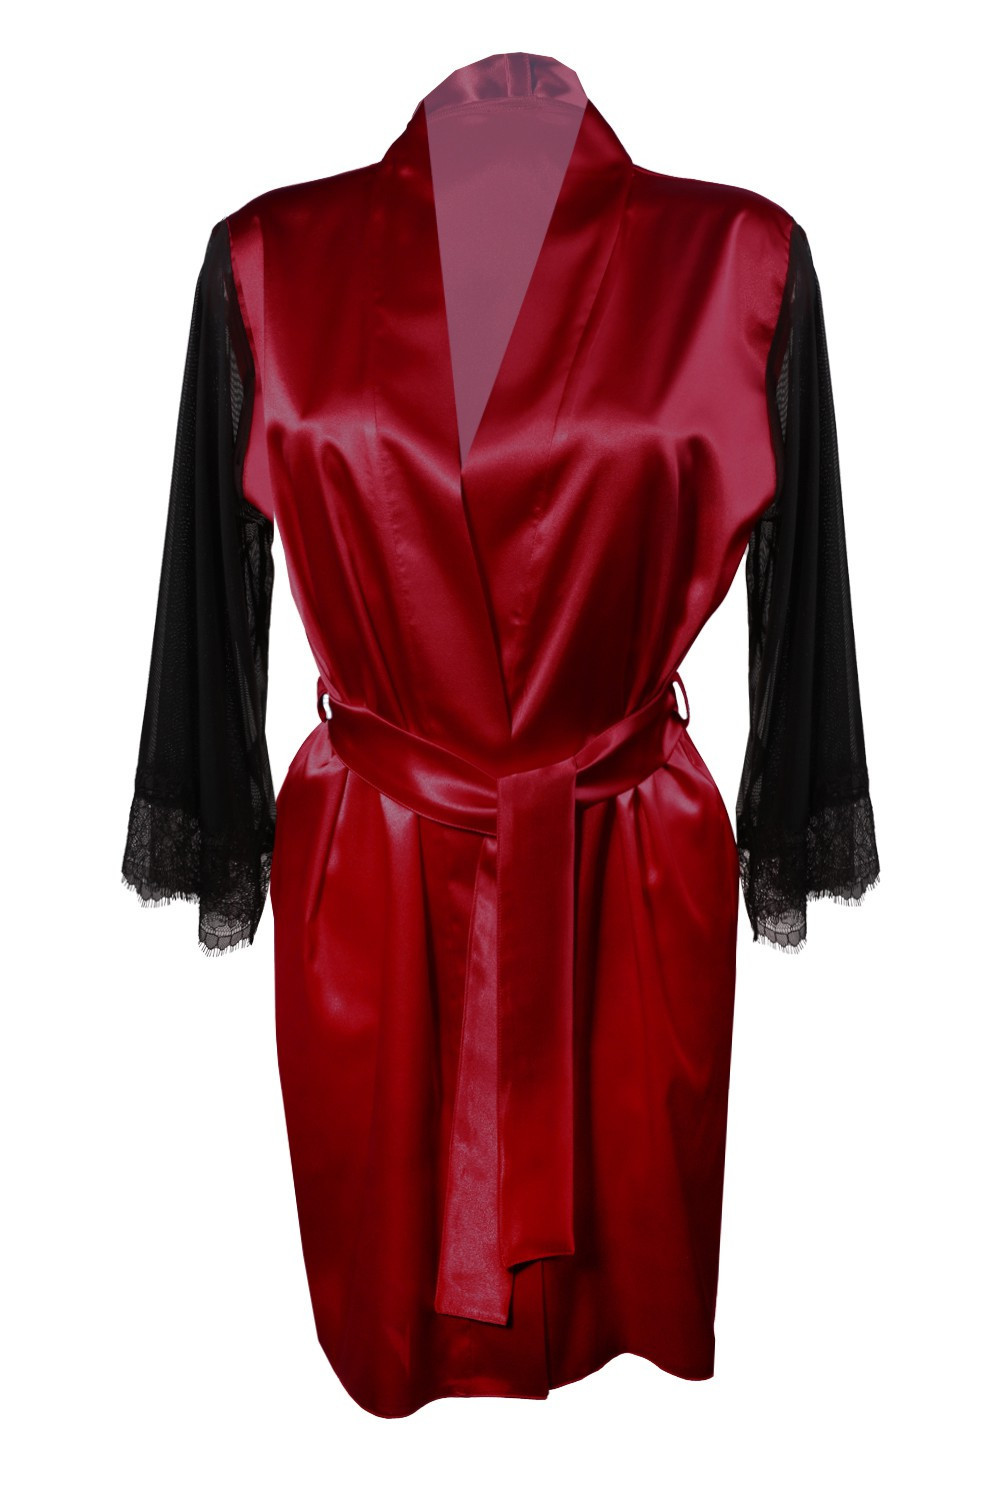 Housecoat model 18227242 Crimson - DKaren Velikost: M, Barva: Crimson